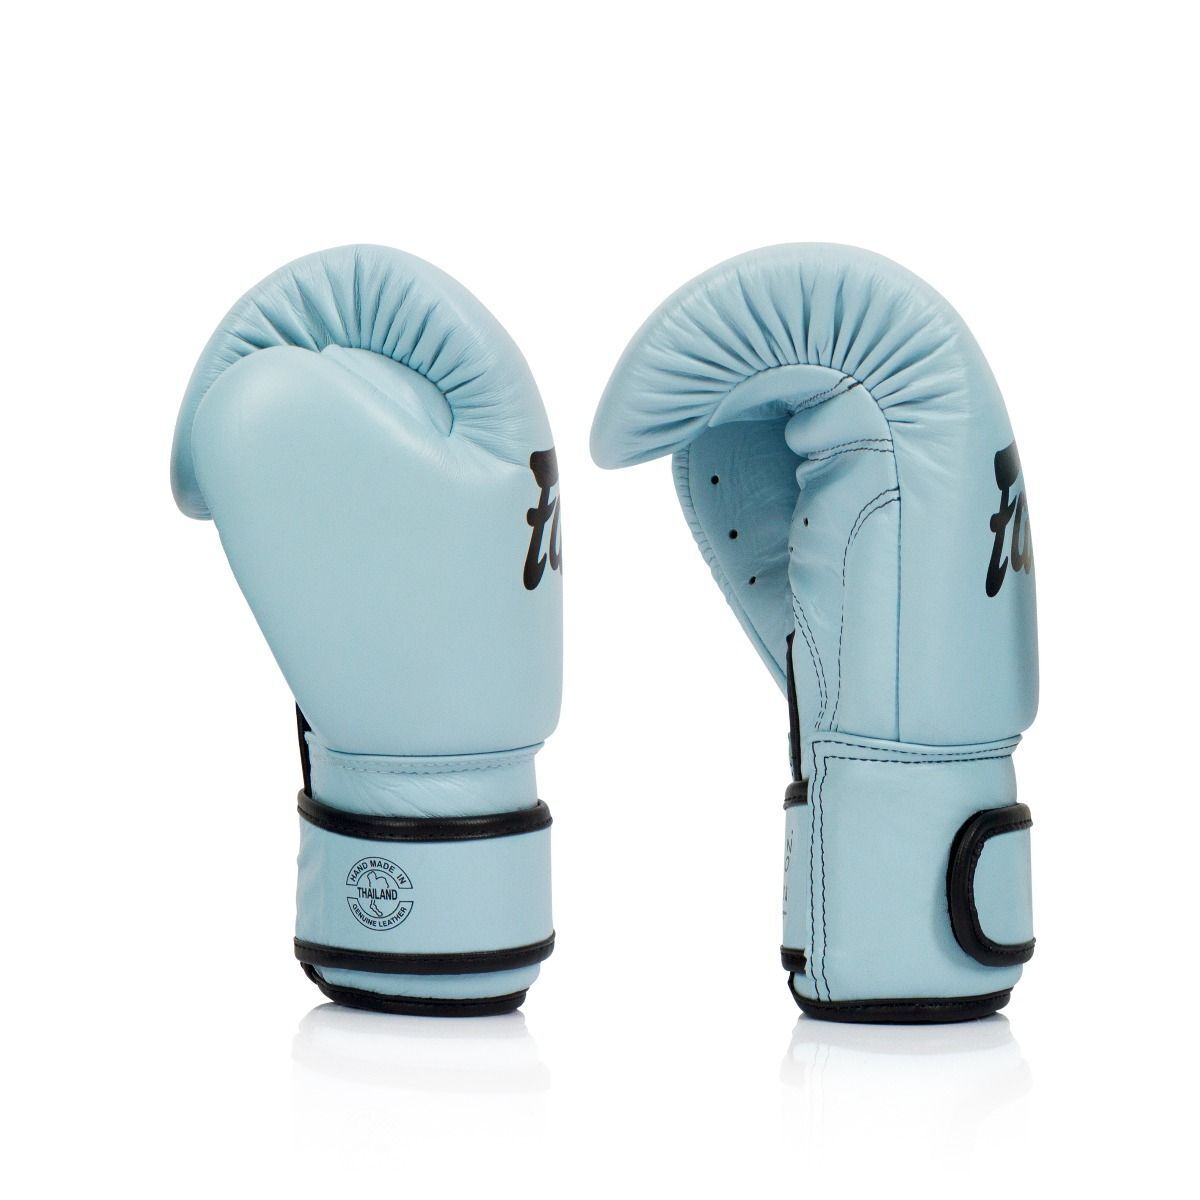 Fairtex Paste Blue Boxing Gloves 